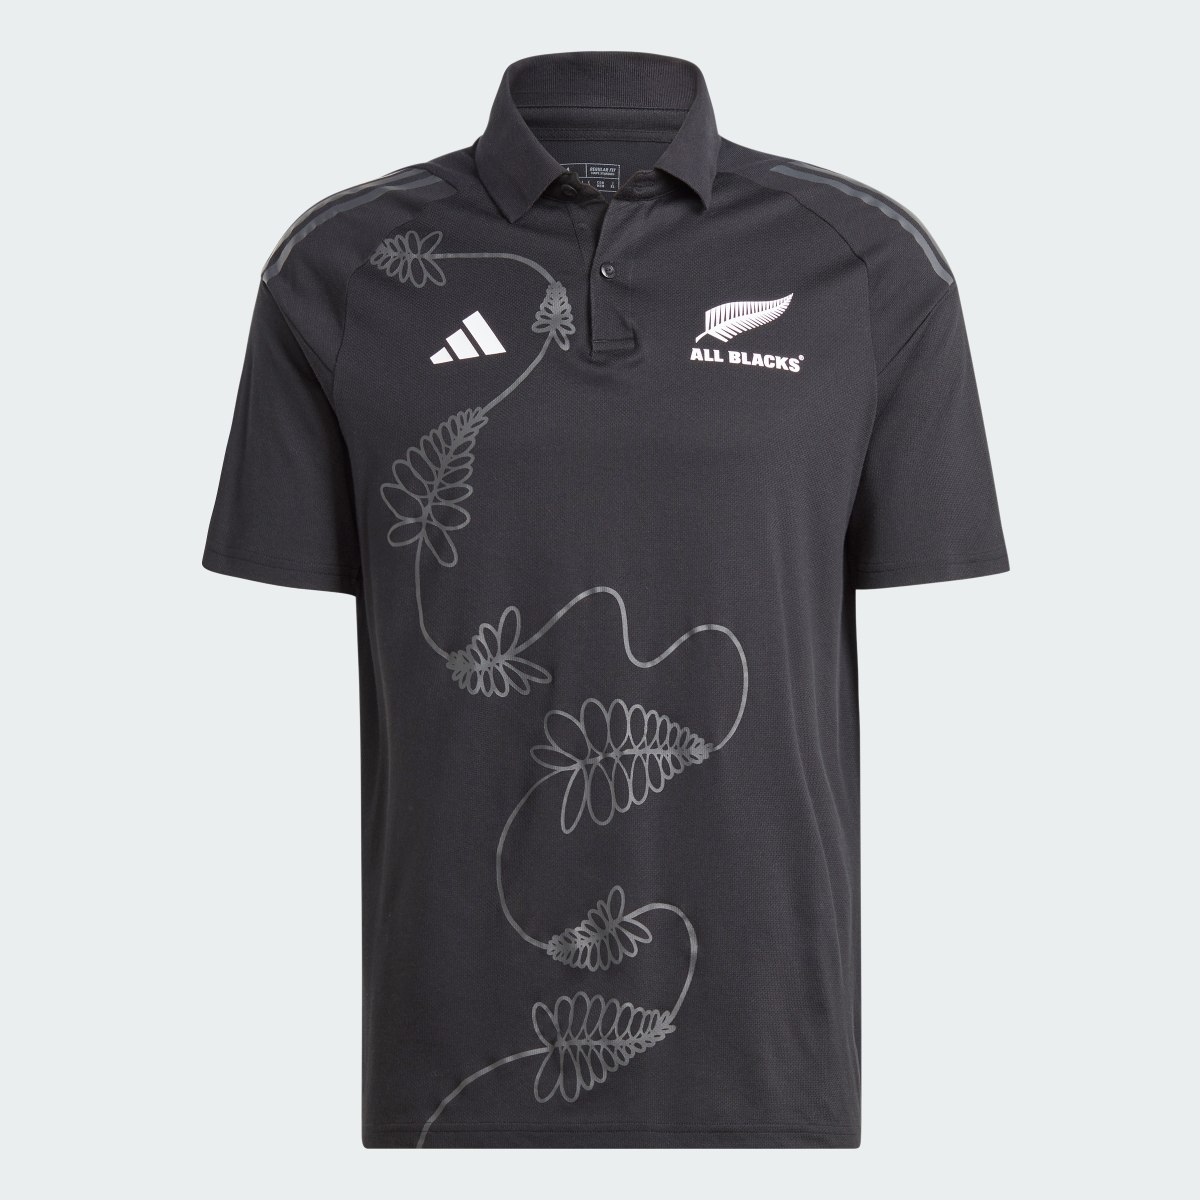 Adidas All Blacks Rugby Polo Shirt. 5